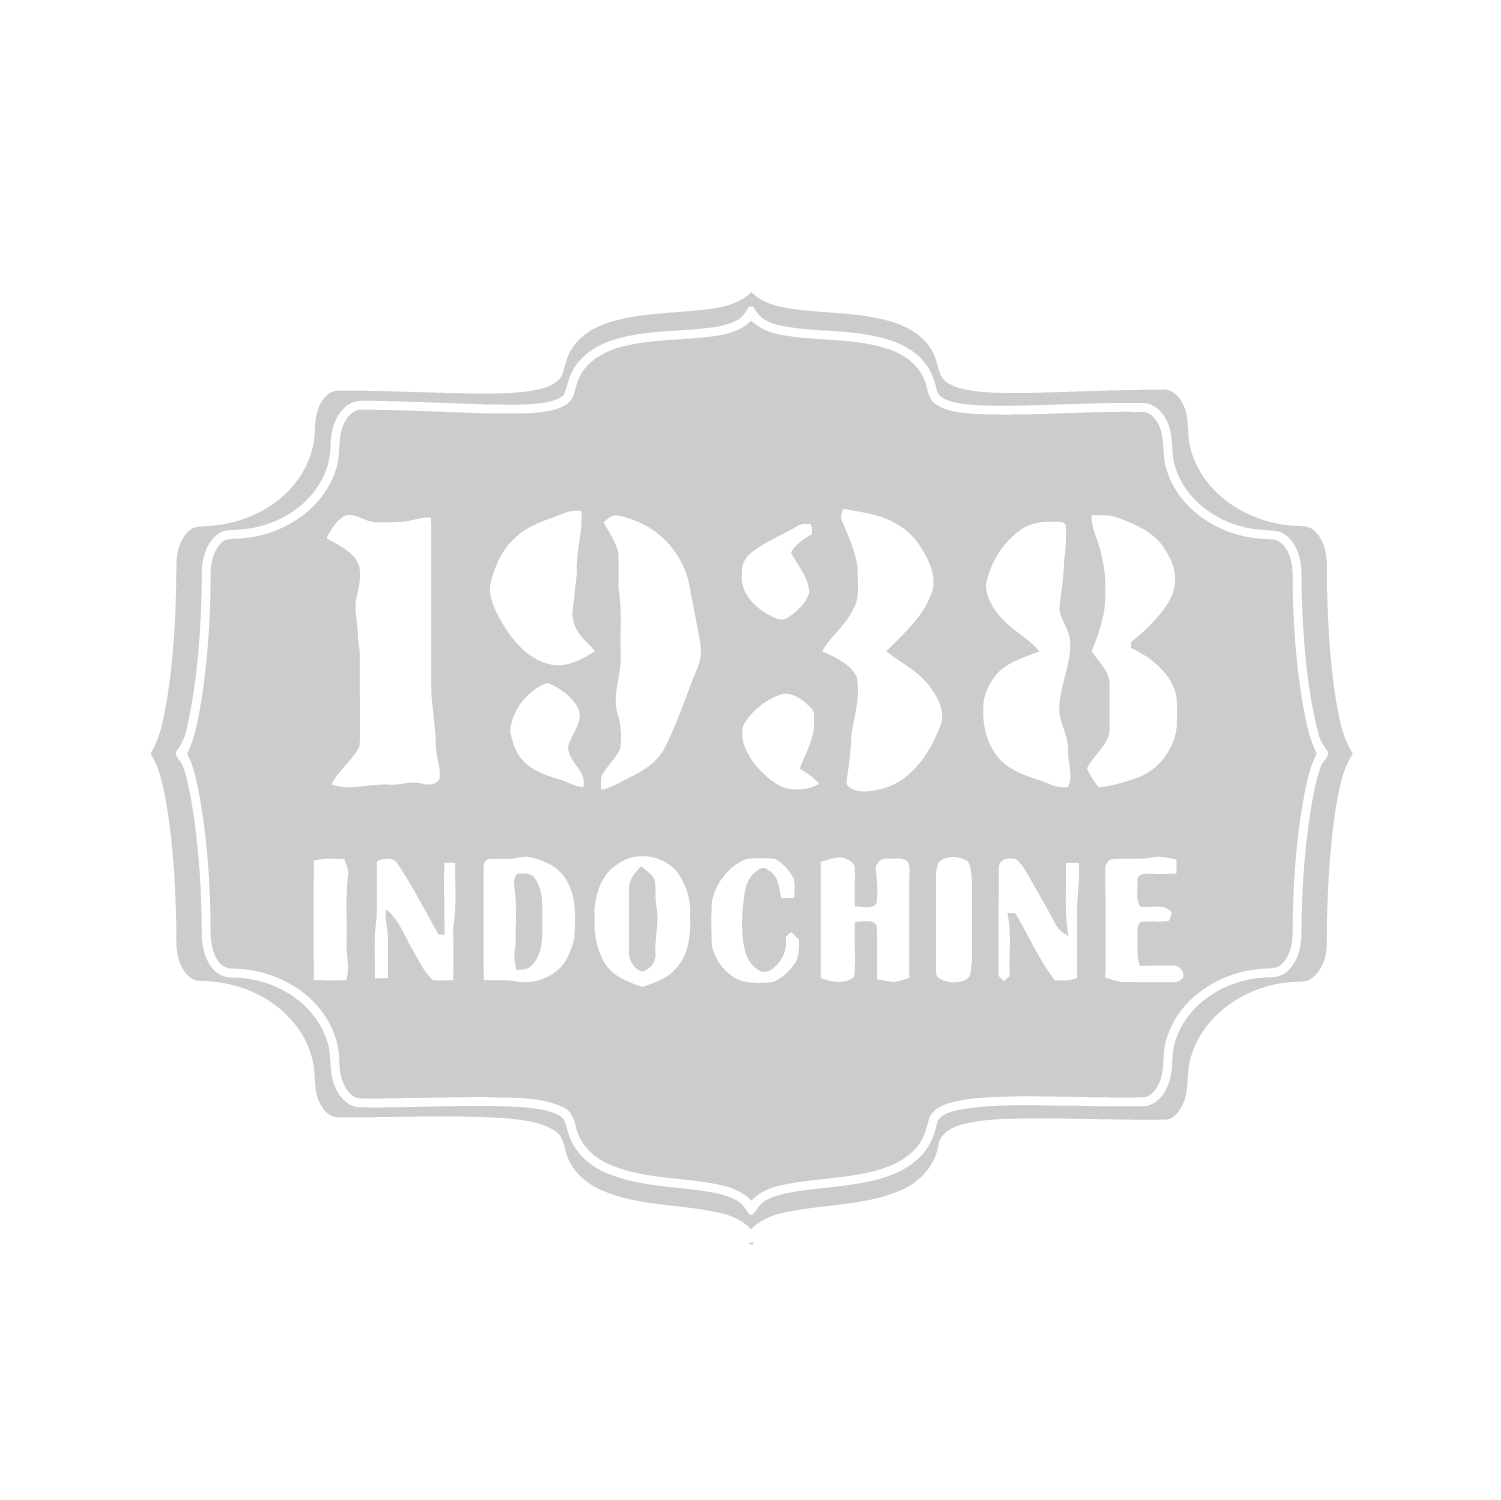 1938 Indochine And The Benihana Dynasty